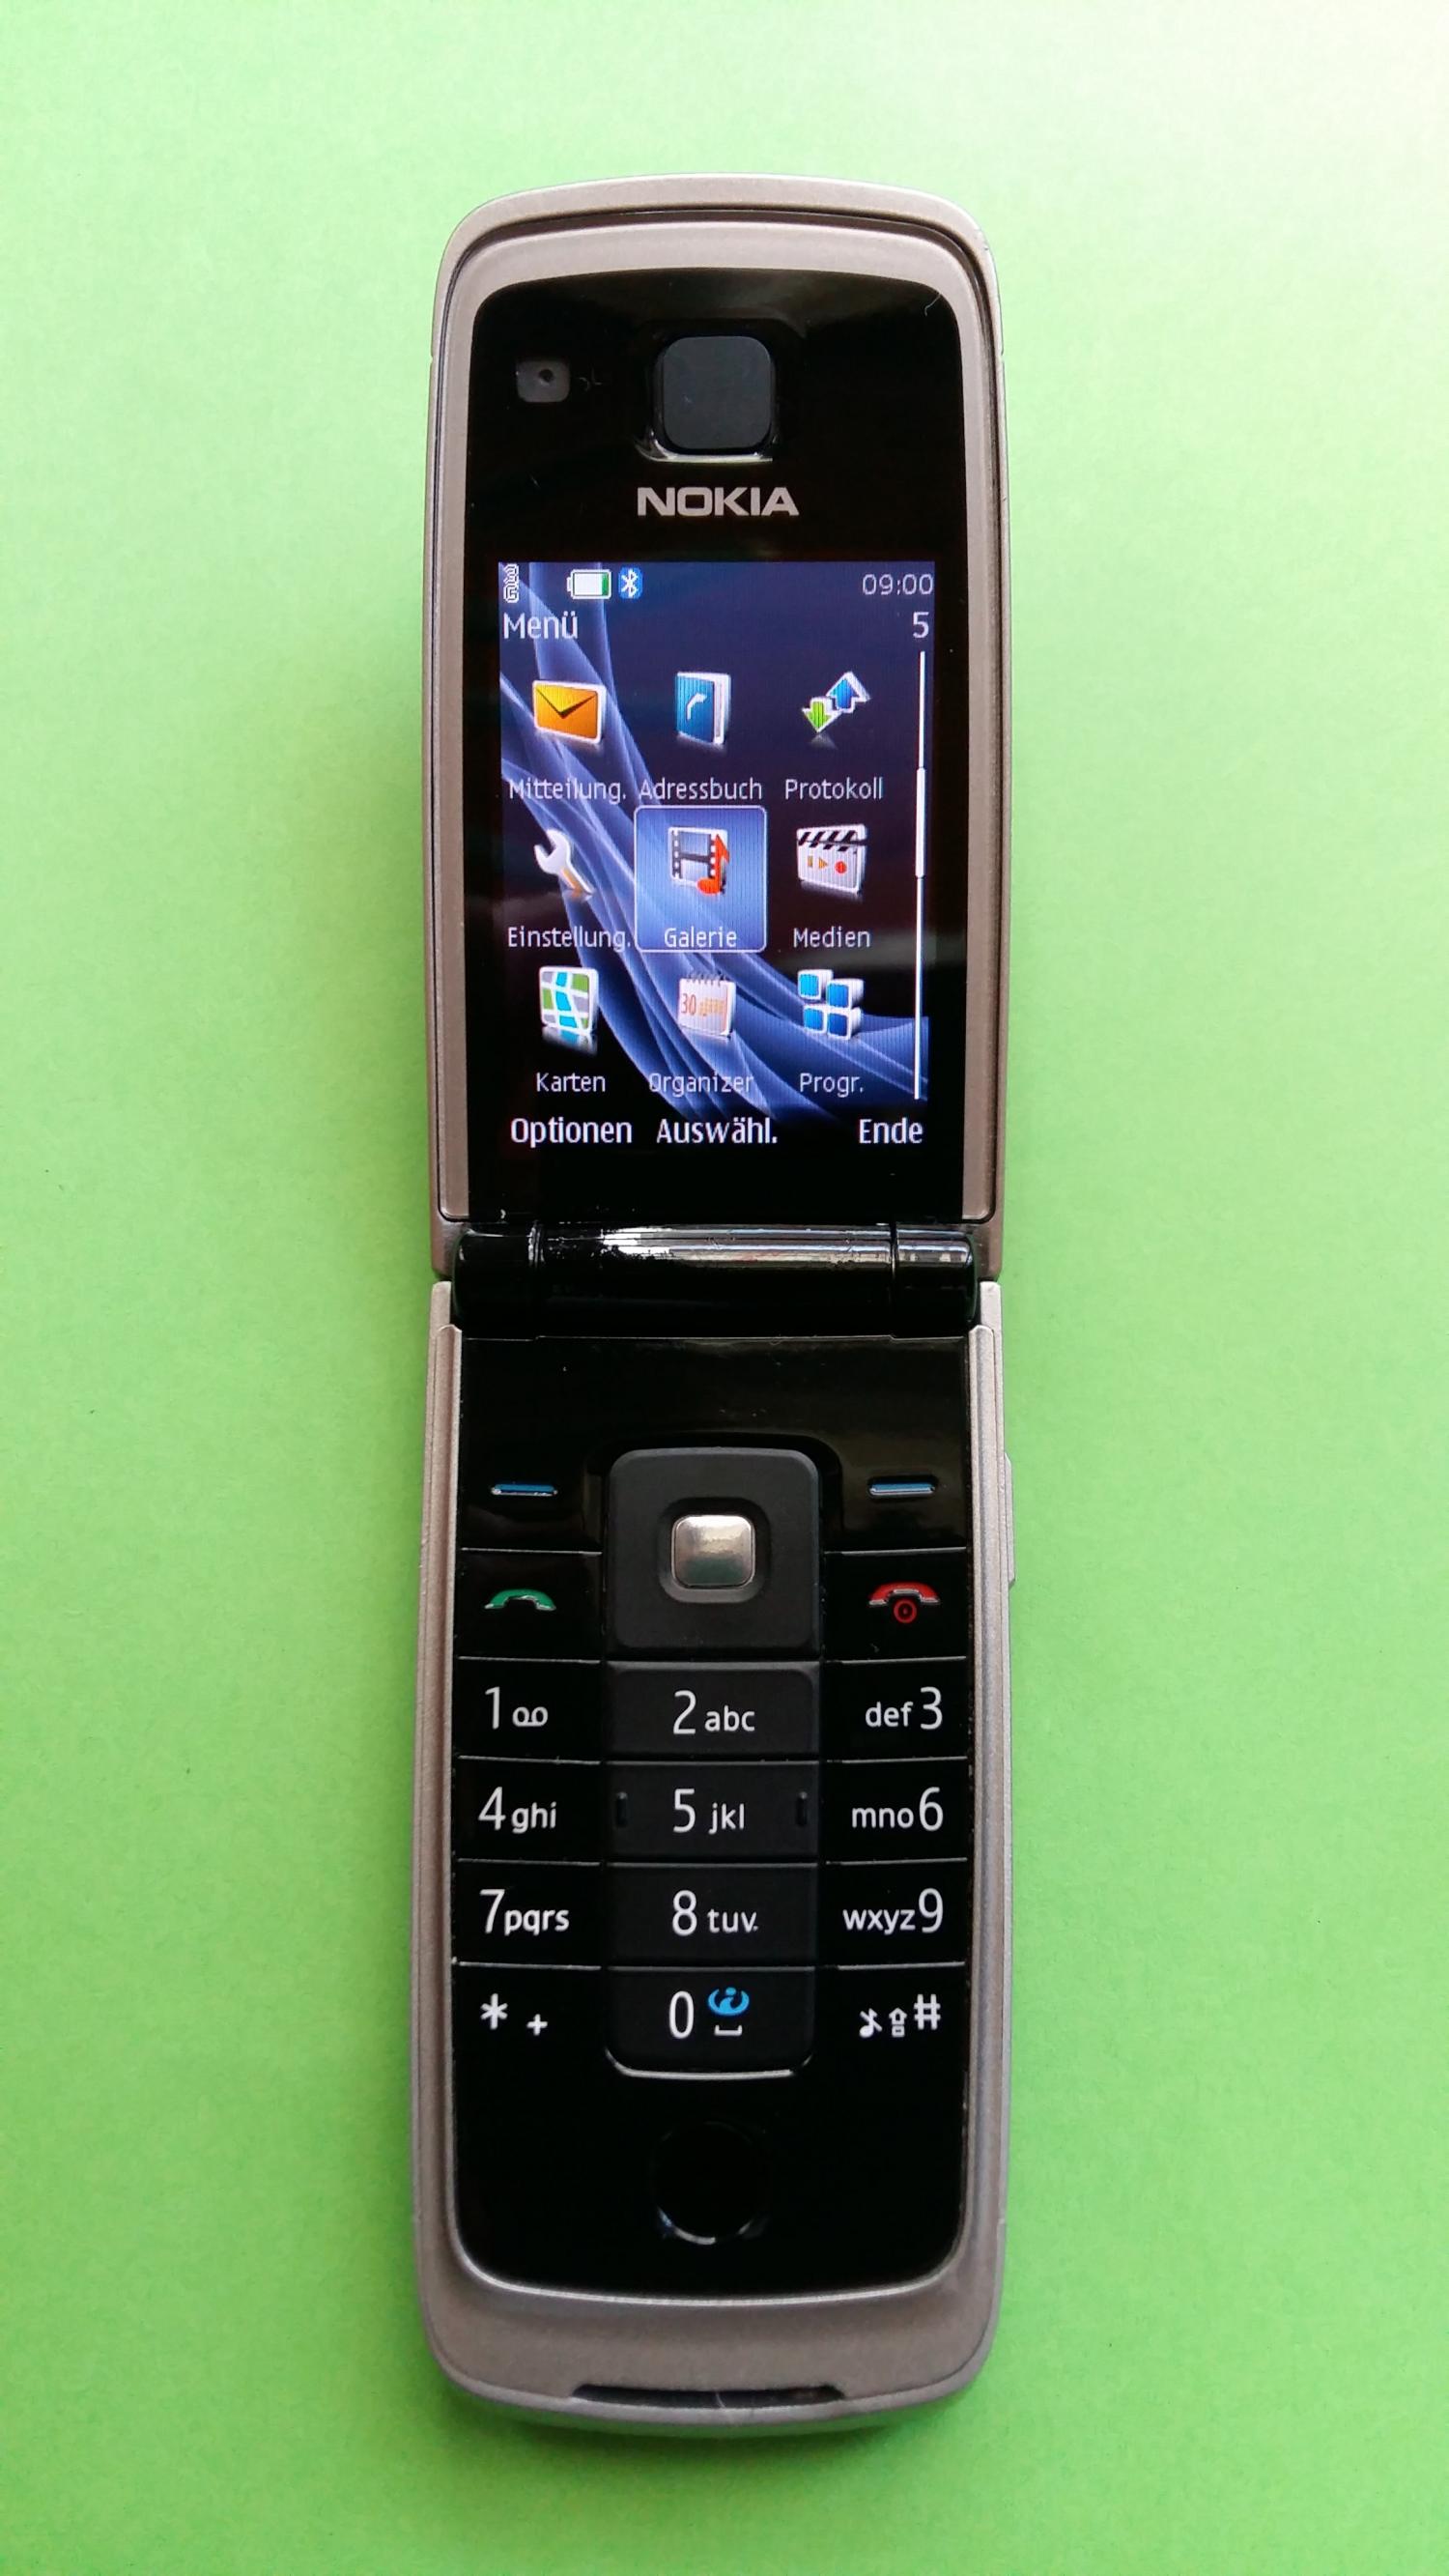 image-7331805-Nokia 6600F-1 Fold (4)2.jpg